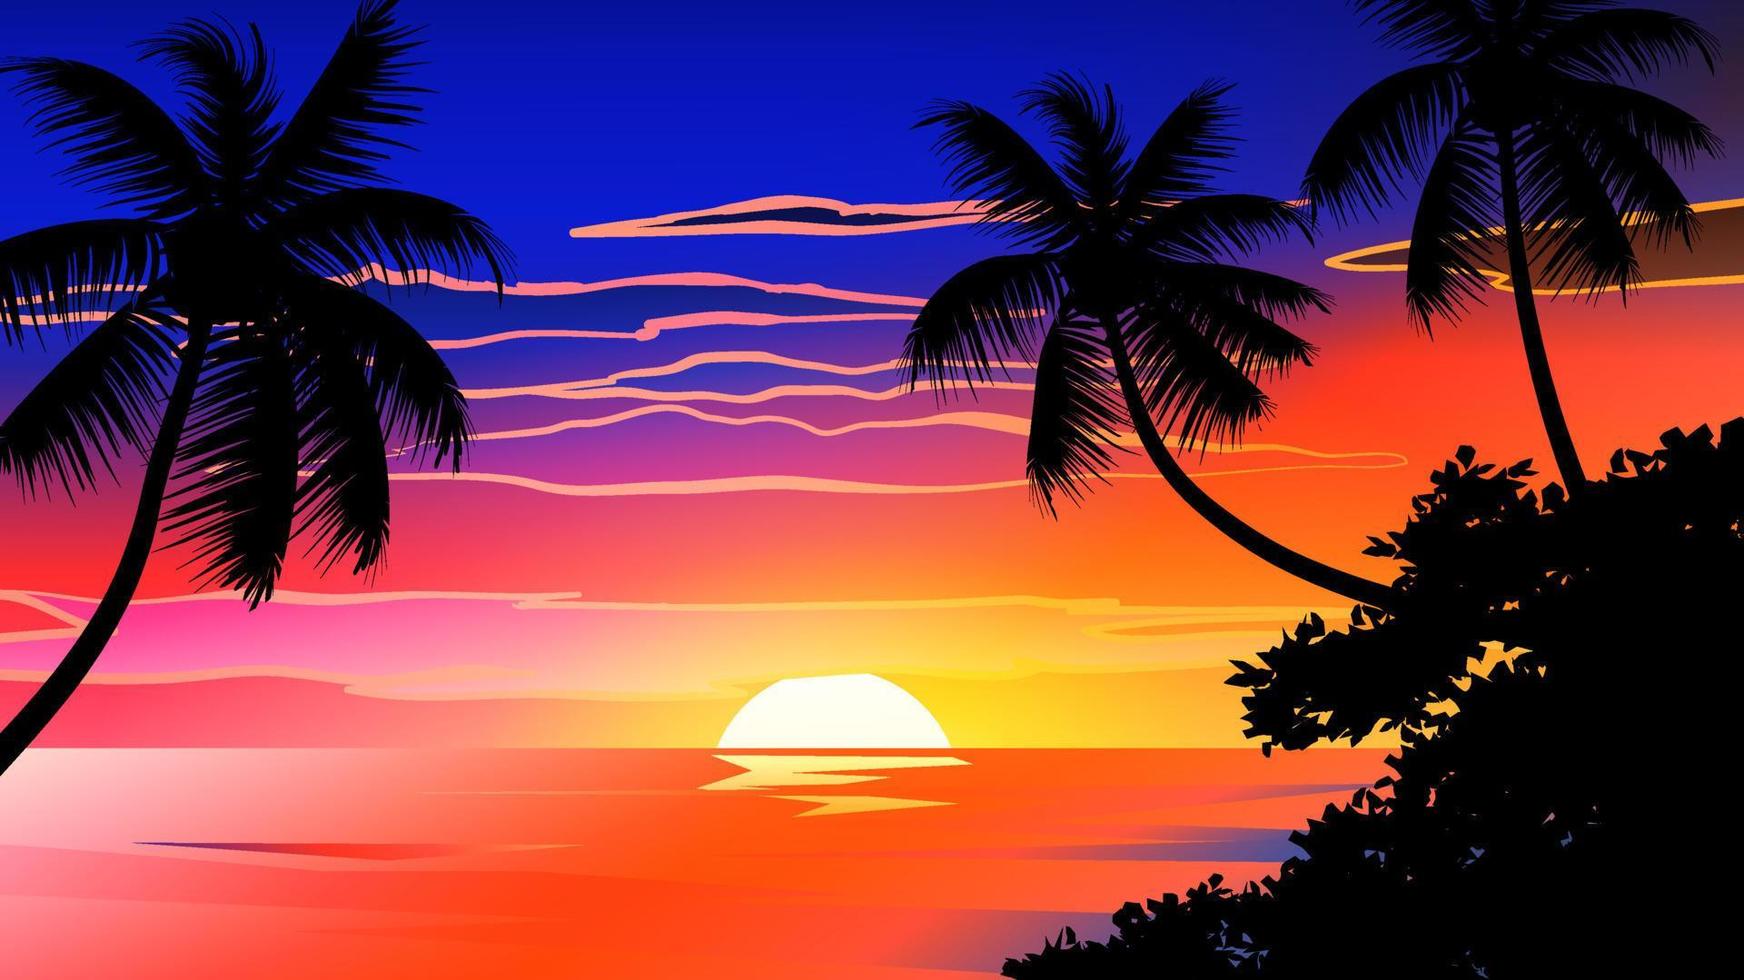 kokospalmer i siluett mot solnedgångens naturbakgrund vektor